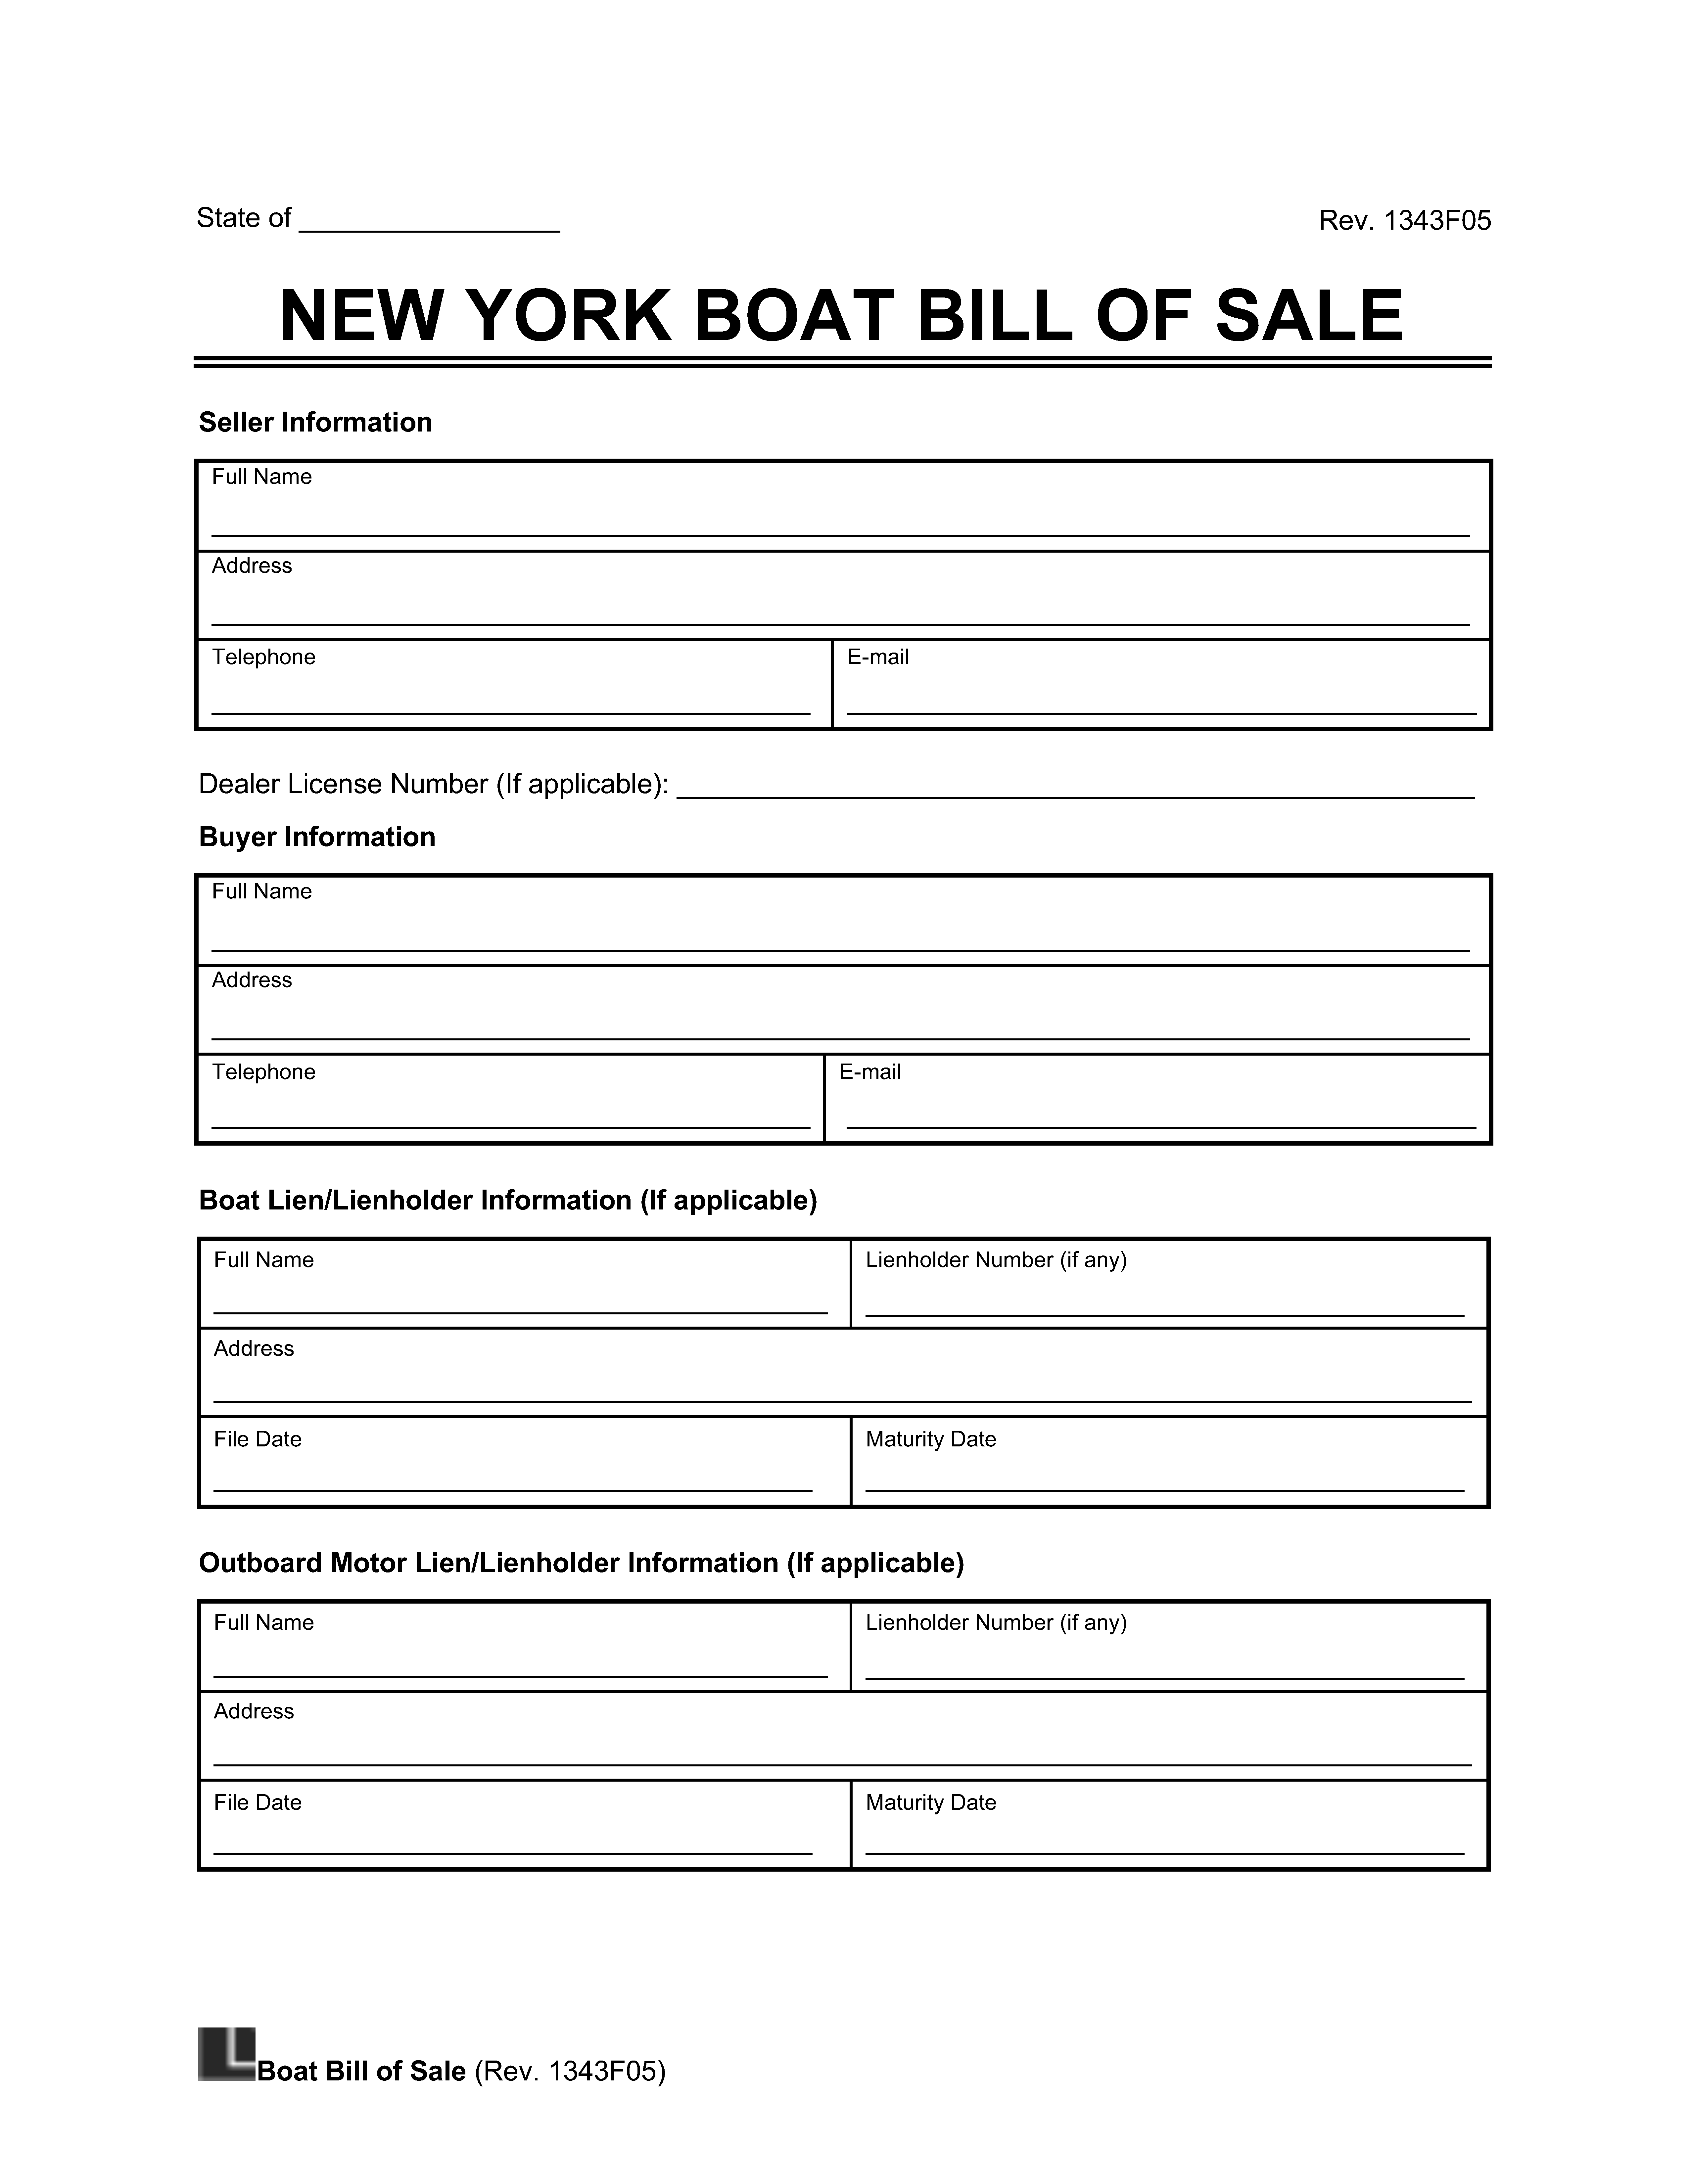 New York Boat Bill of Sale Screenshot